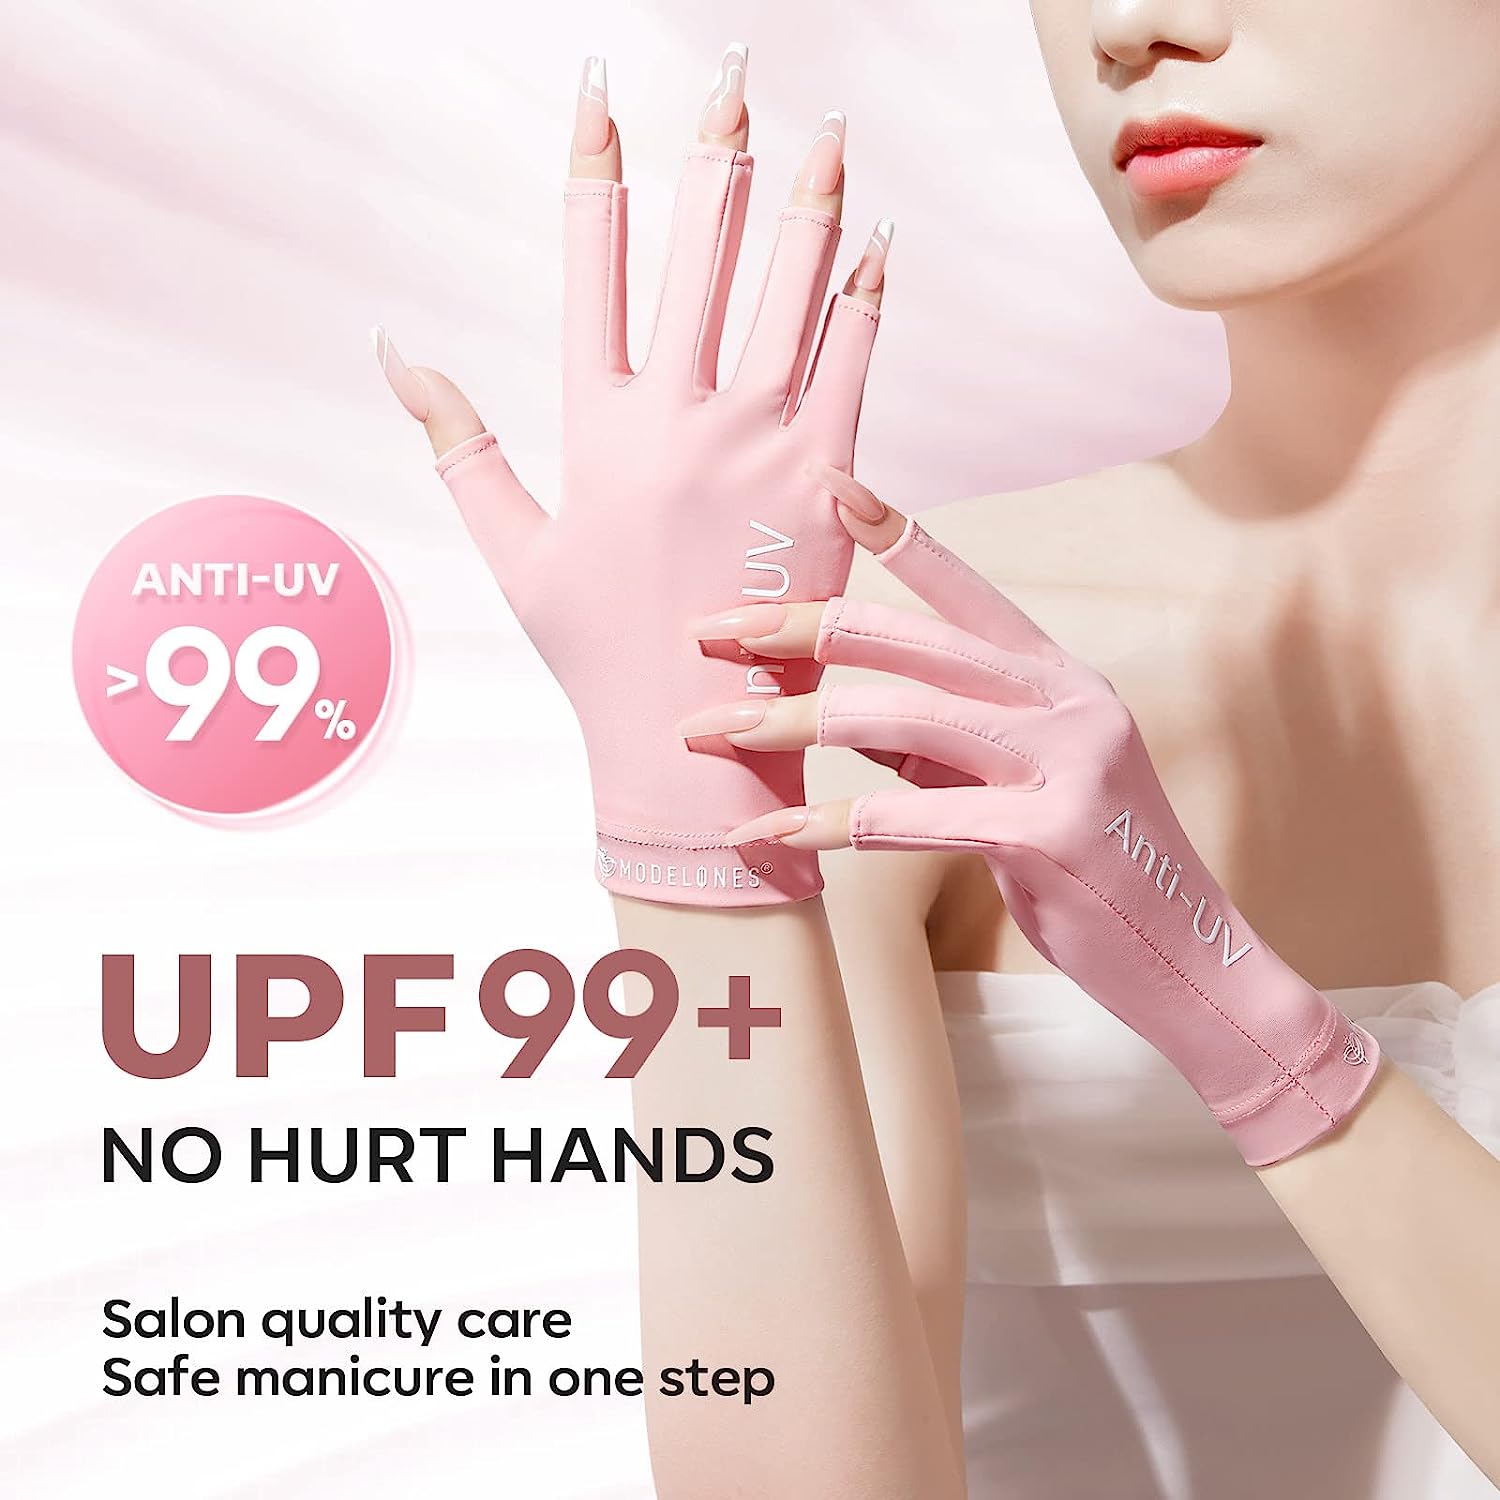 Anti-UV Light Glove With 8W Nail Lamp For Nails Salon Professional UPF 99+